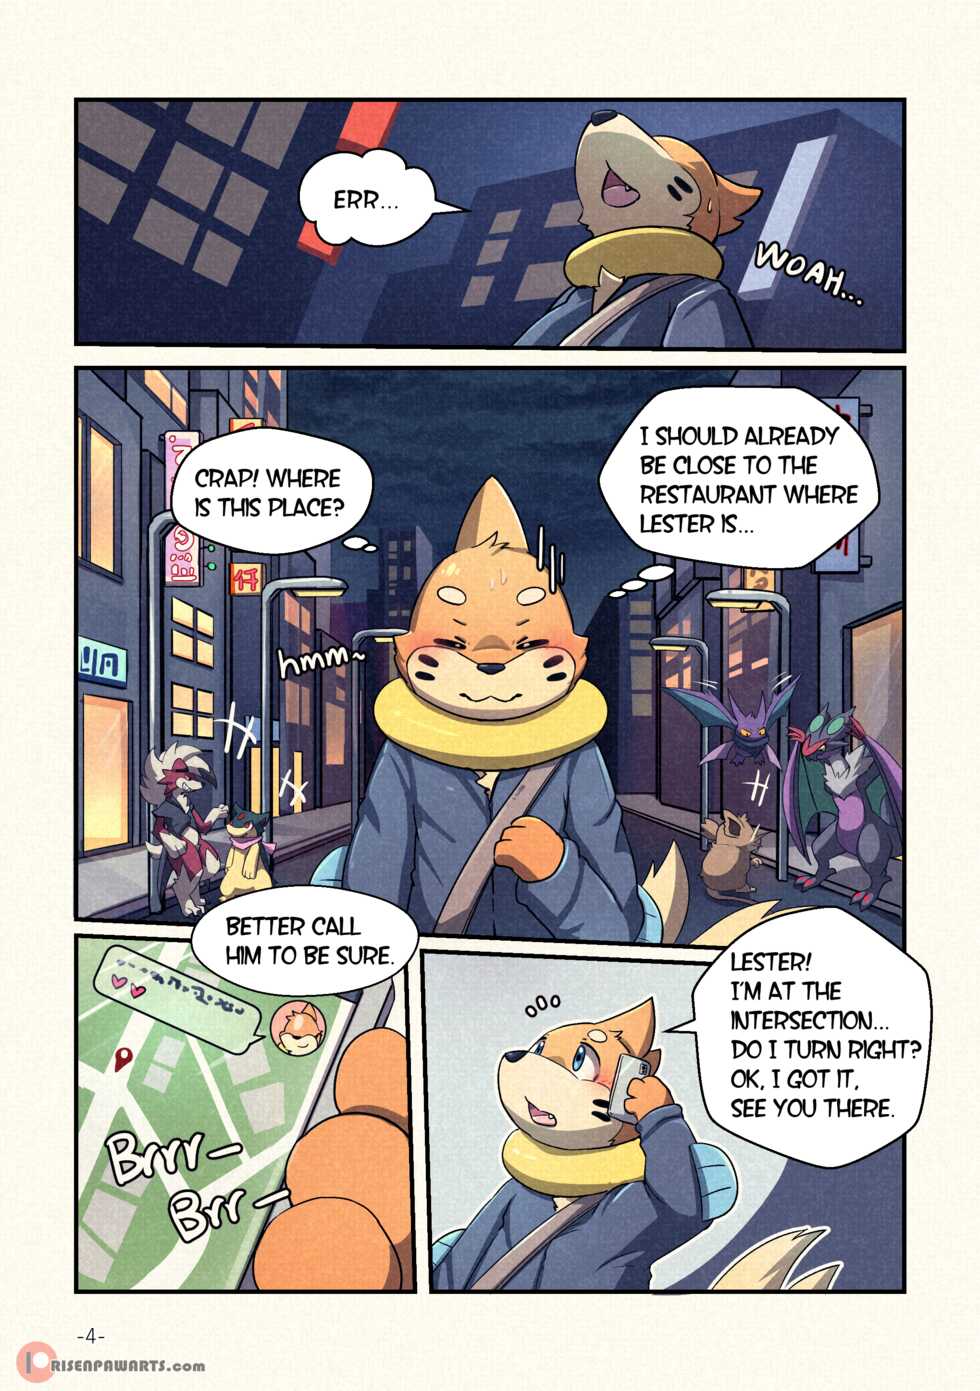 [RisenPaw] The Fulll Moon Part 2 (Pokemon) (In progress) - Page 2